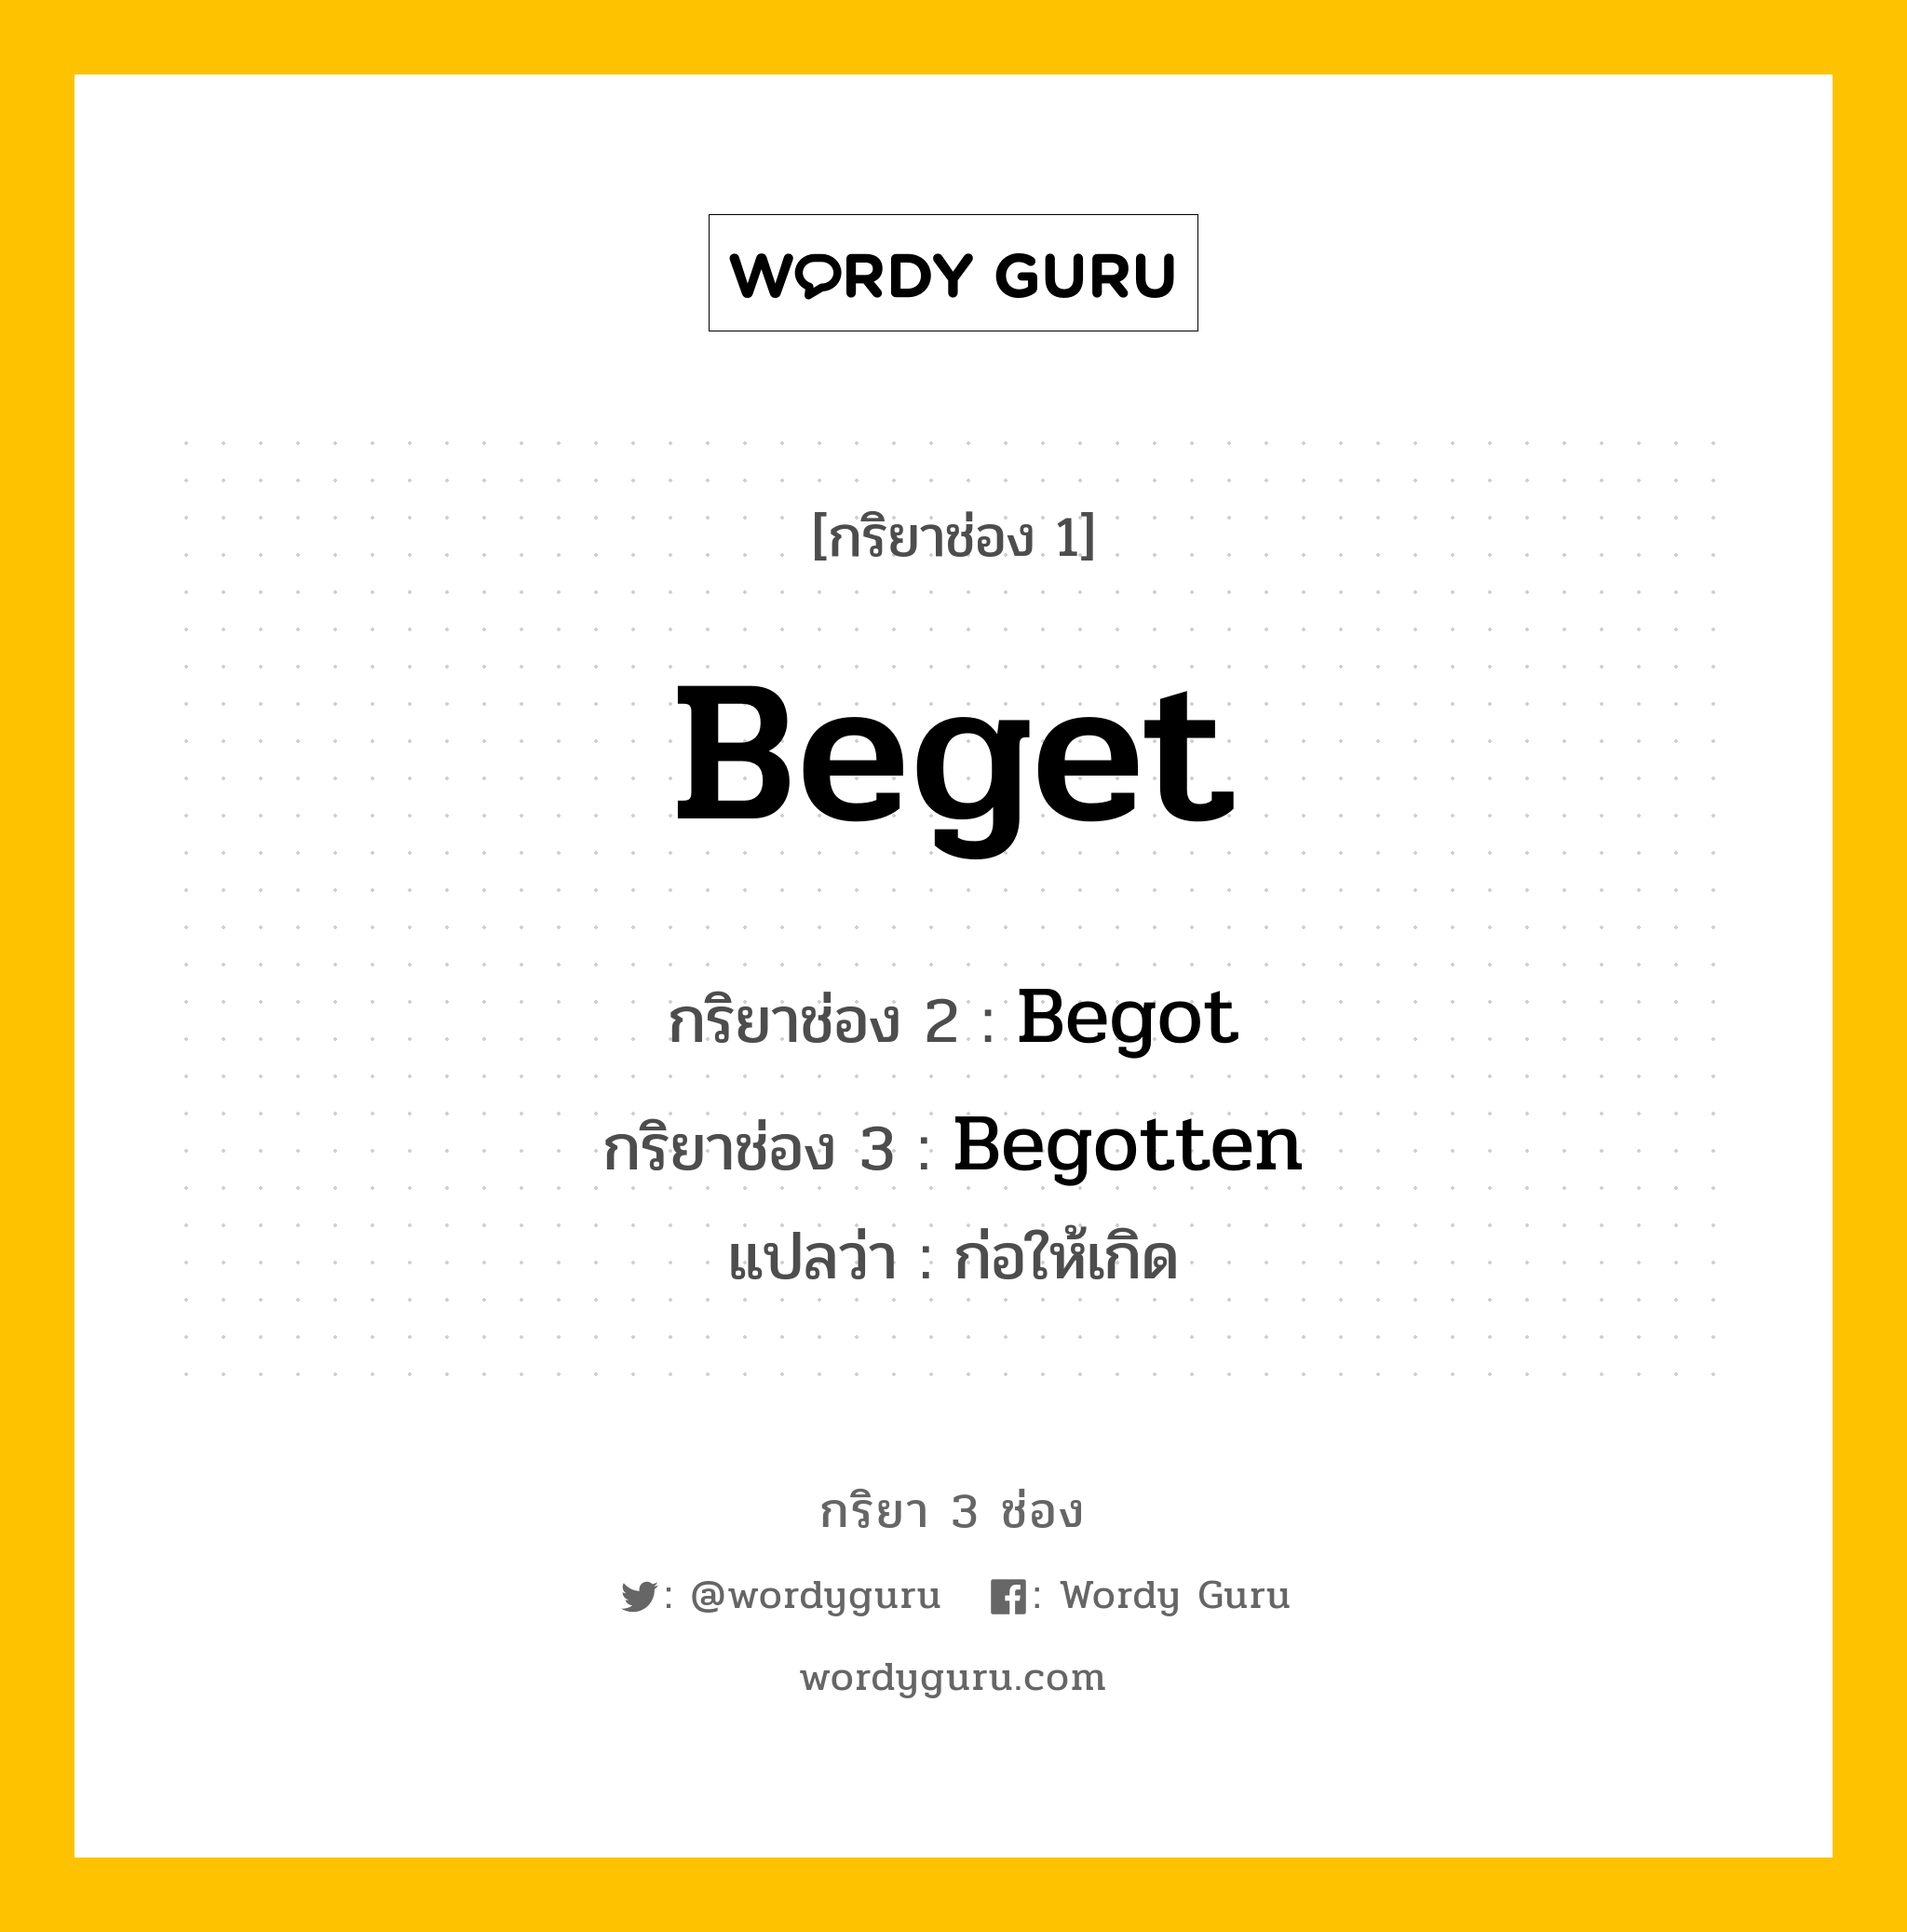 Beget มีกริยา 3 ช่องอะไรบ้าง? คำศัพท์ในกลุ่มประเภท Irregular Verb, กริยาช่อง 1 Beget กริยาช่อง 2 Begot กริยาช่อง 3 Begotten แปลว่า ก่อให้เกิด มีหลายแบบ y หมวด Irregular Verb